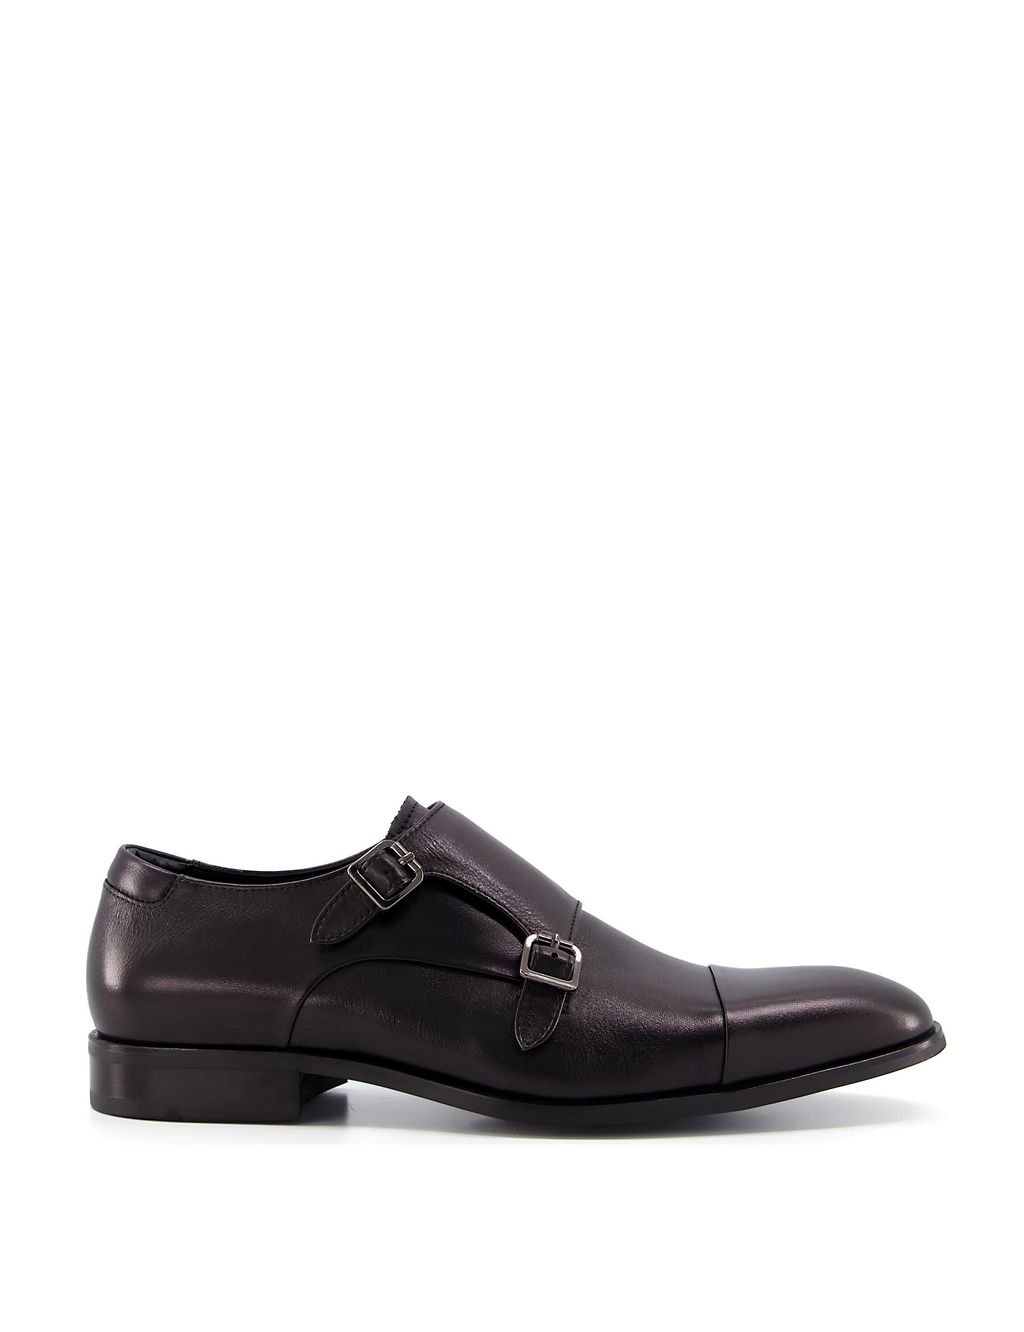 Leather Double Monk Strap Shoes | Dune London | M&S